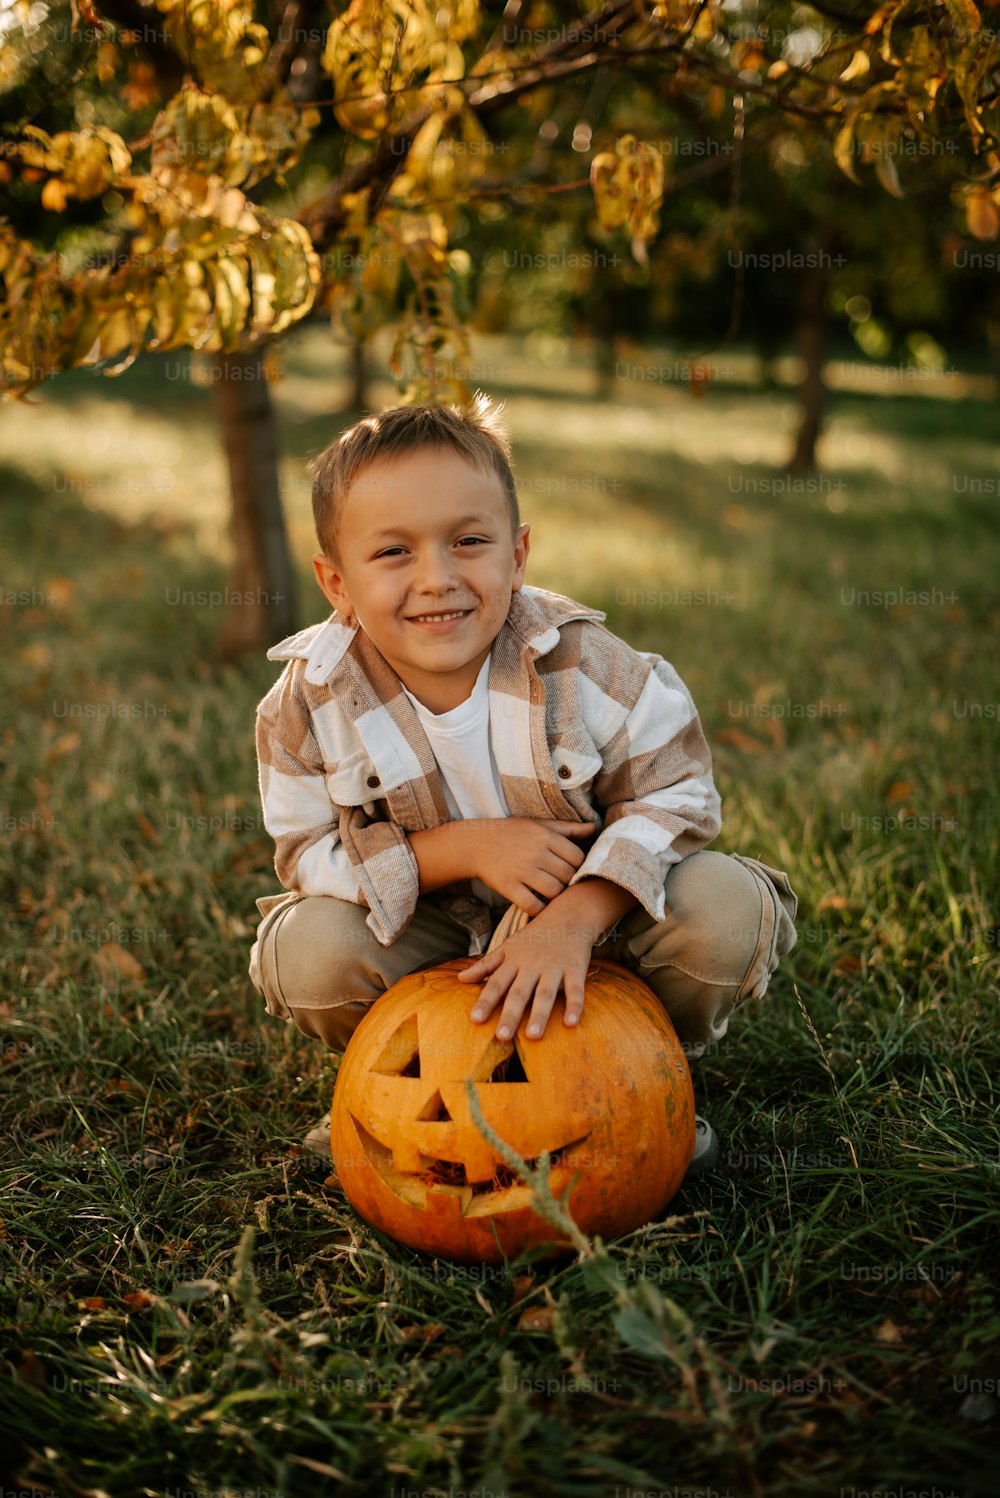 a little boy sitting in the grass with a pumpkin